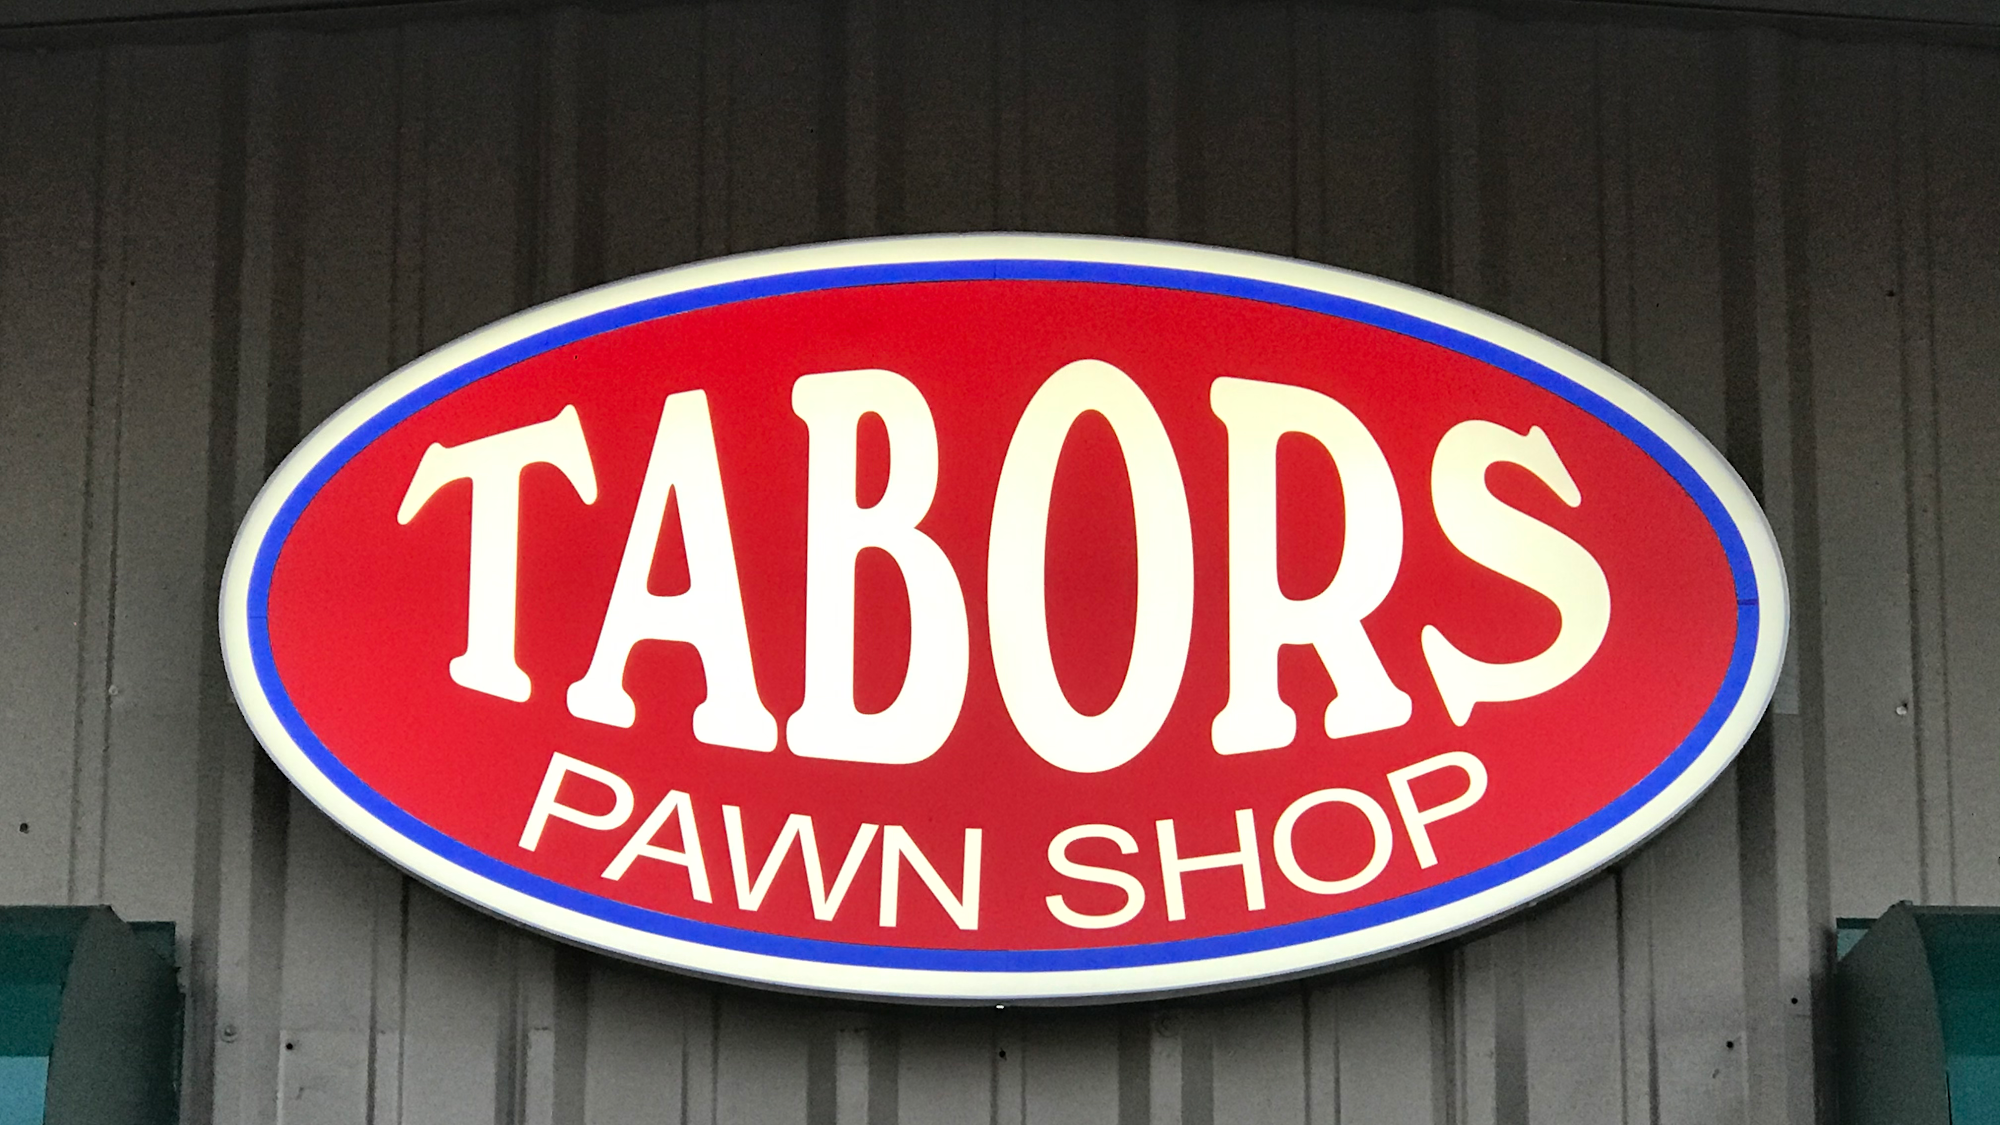 Tabor's Pawn Shop